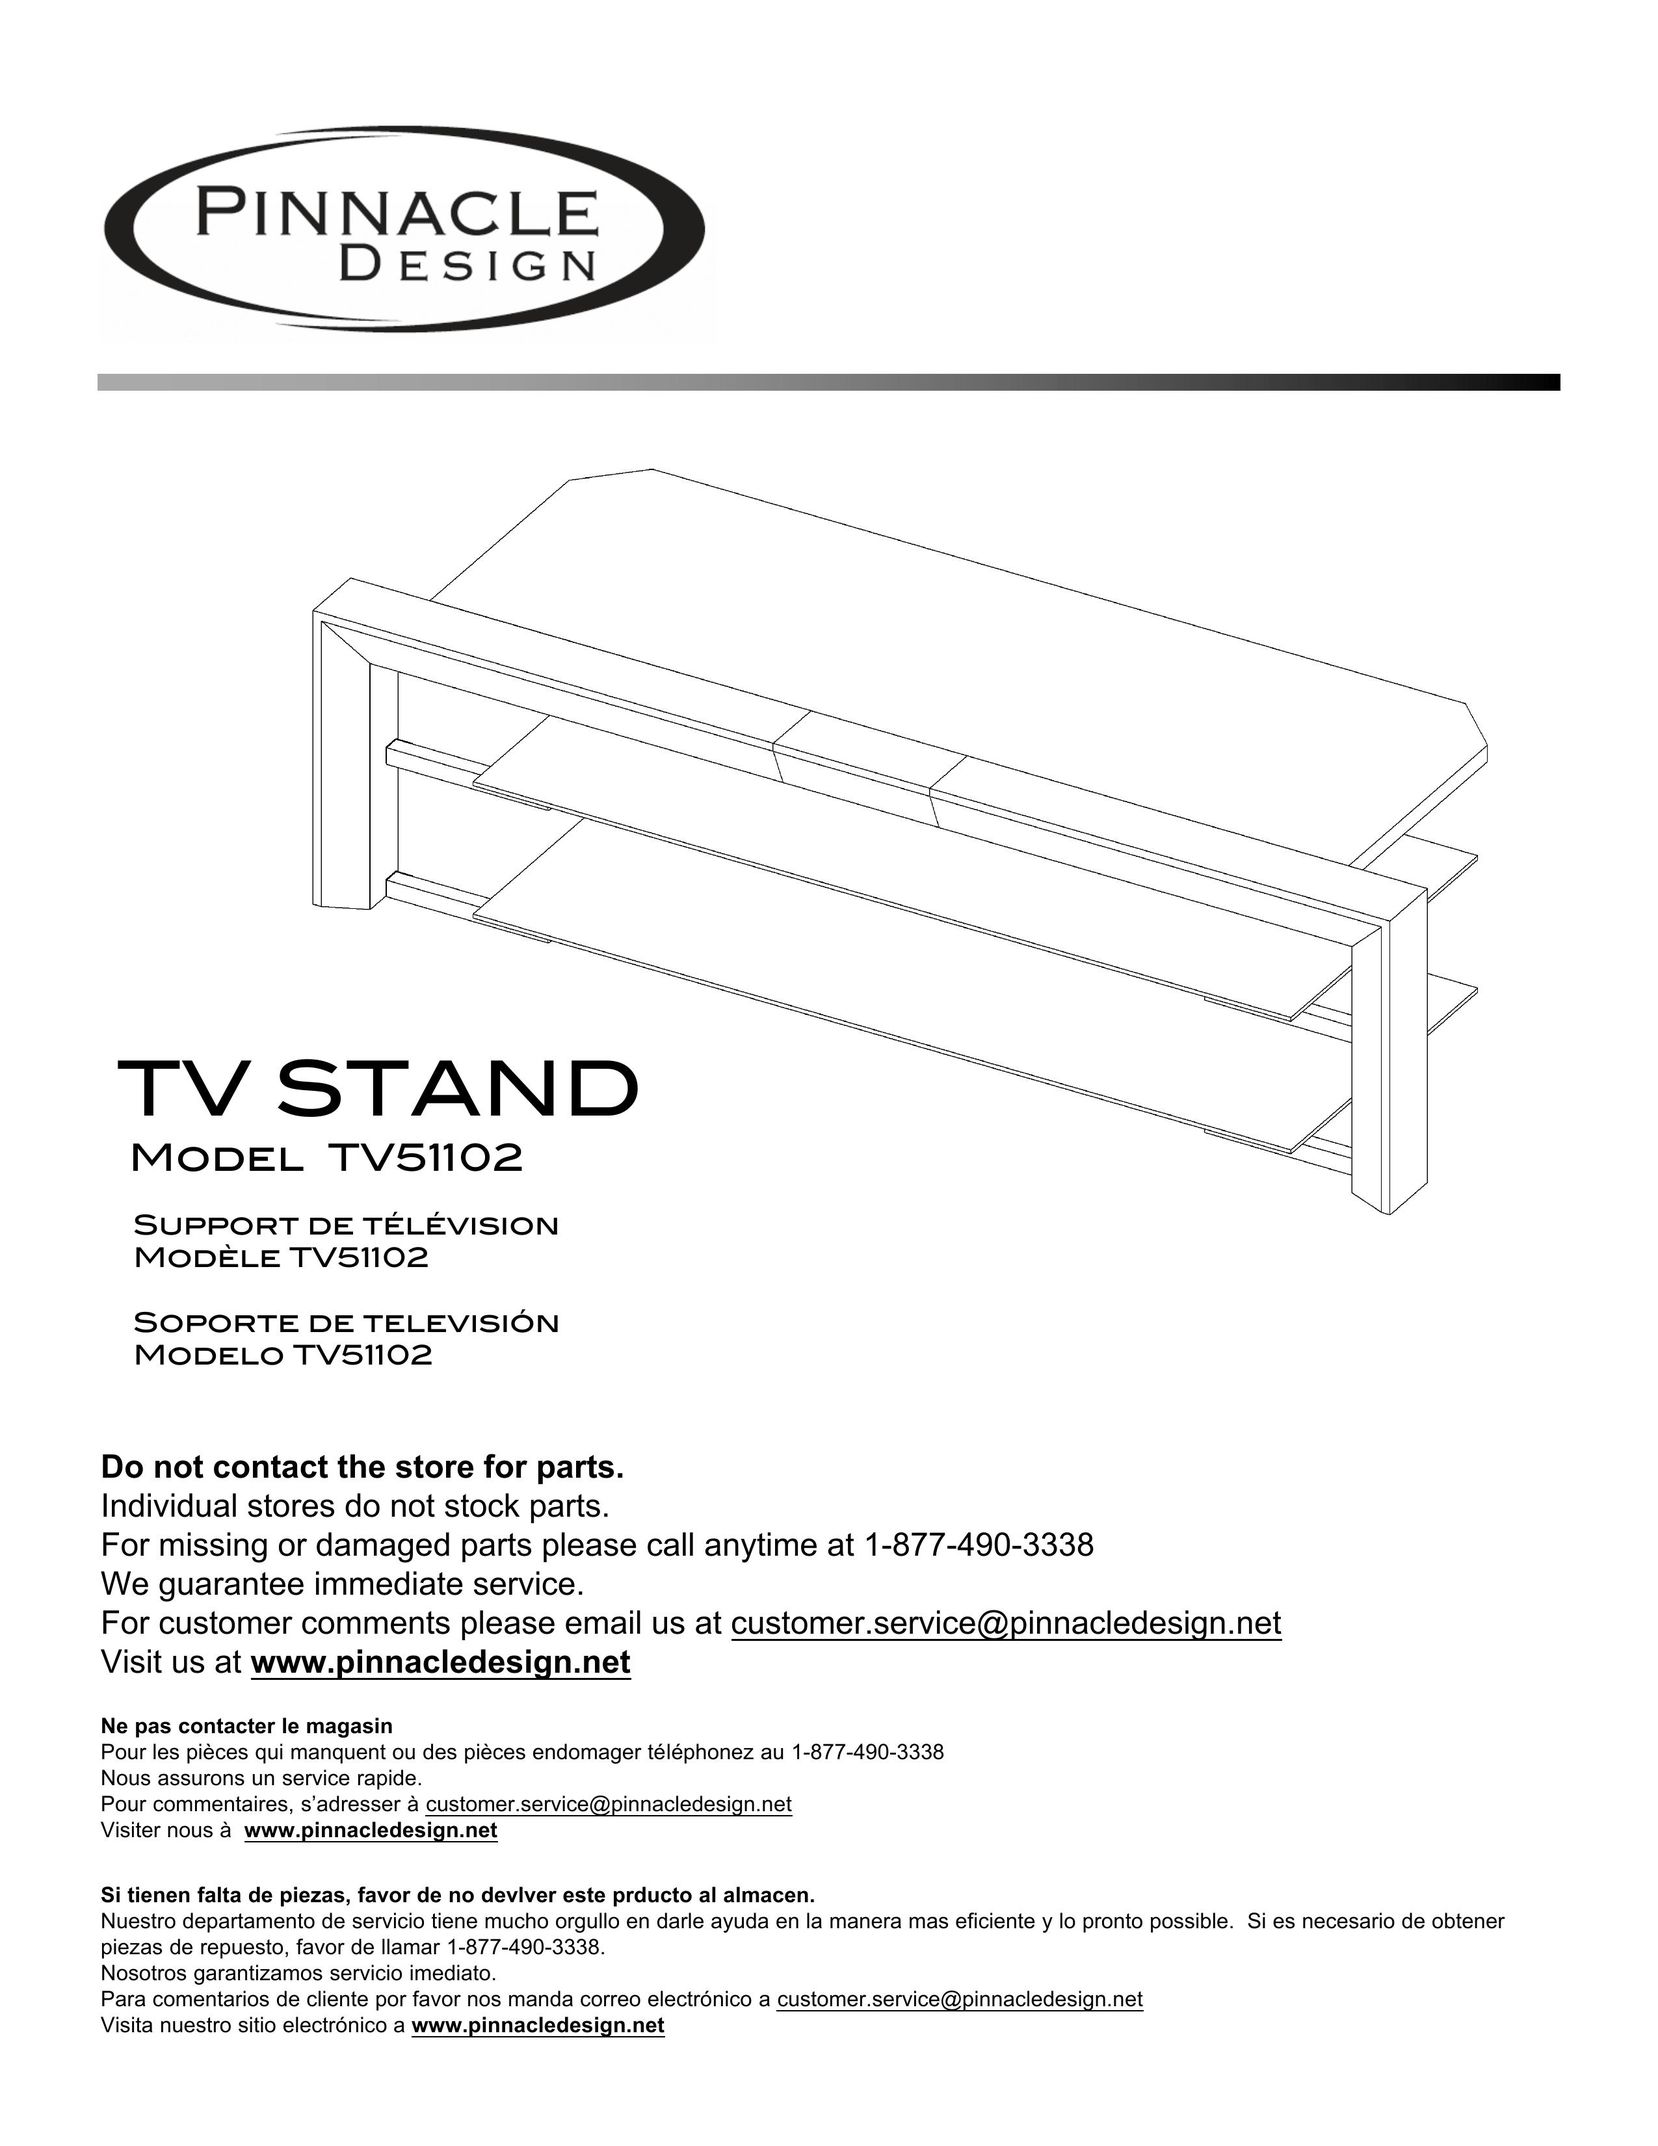 Pinnacle Design TV51102 TV Video Accessories User Manual